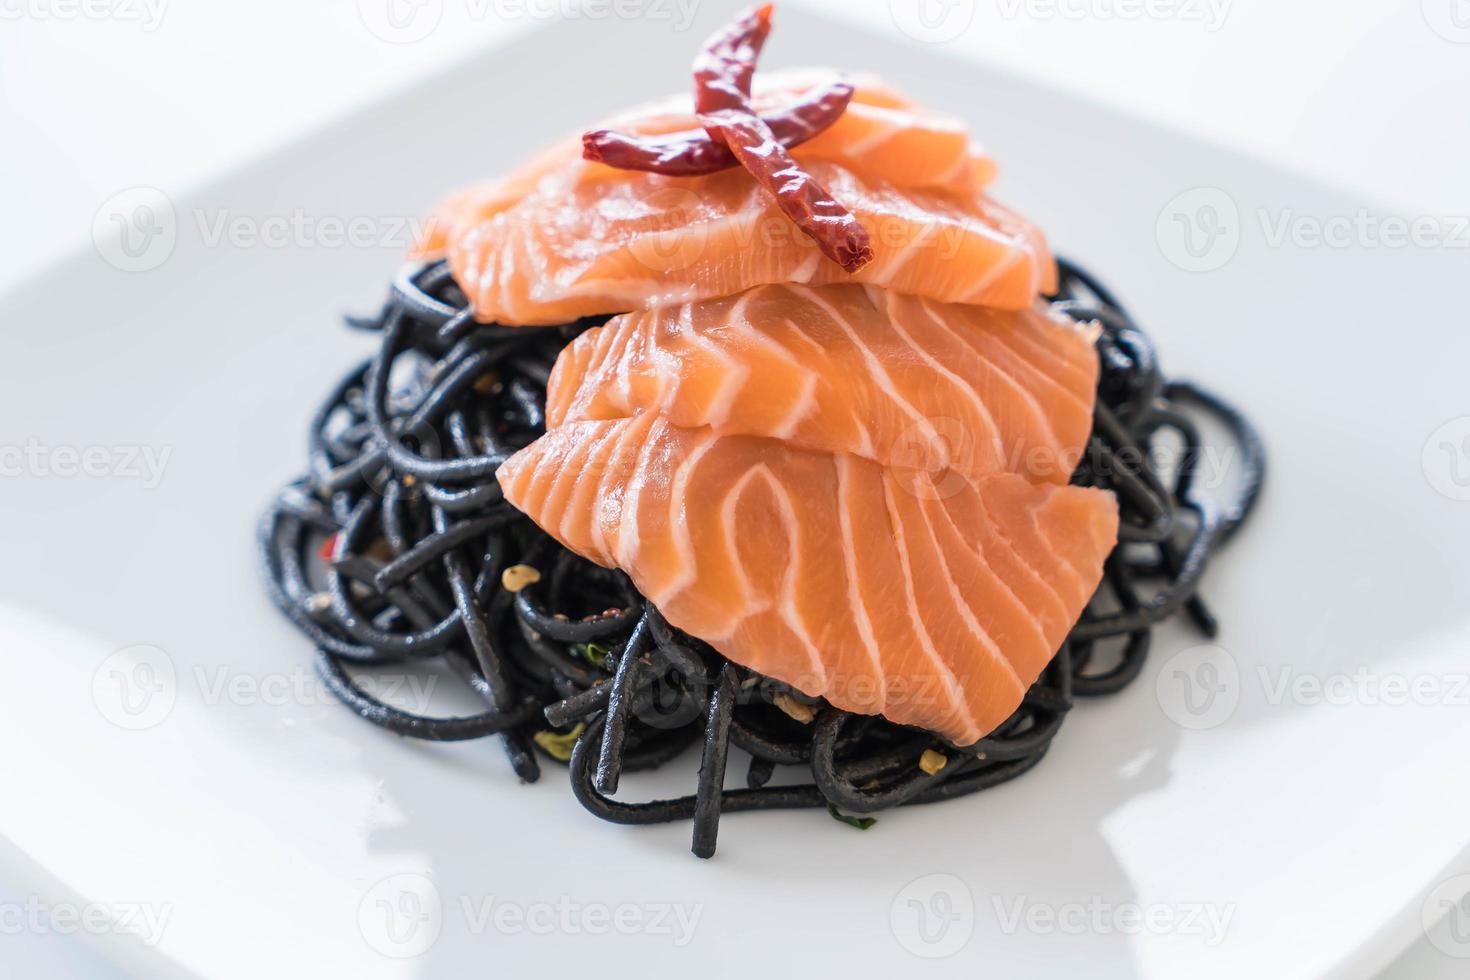 pittige zwarte spaghetti met zalm - fusion food style foto